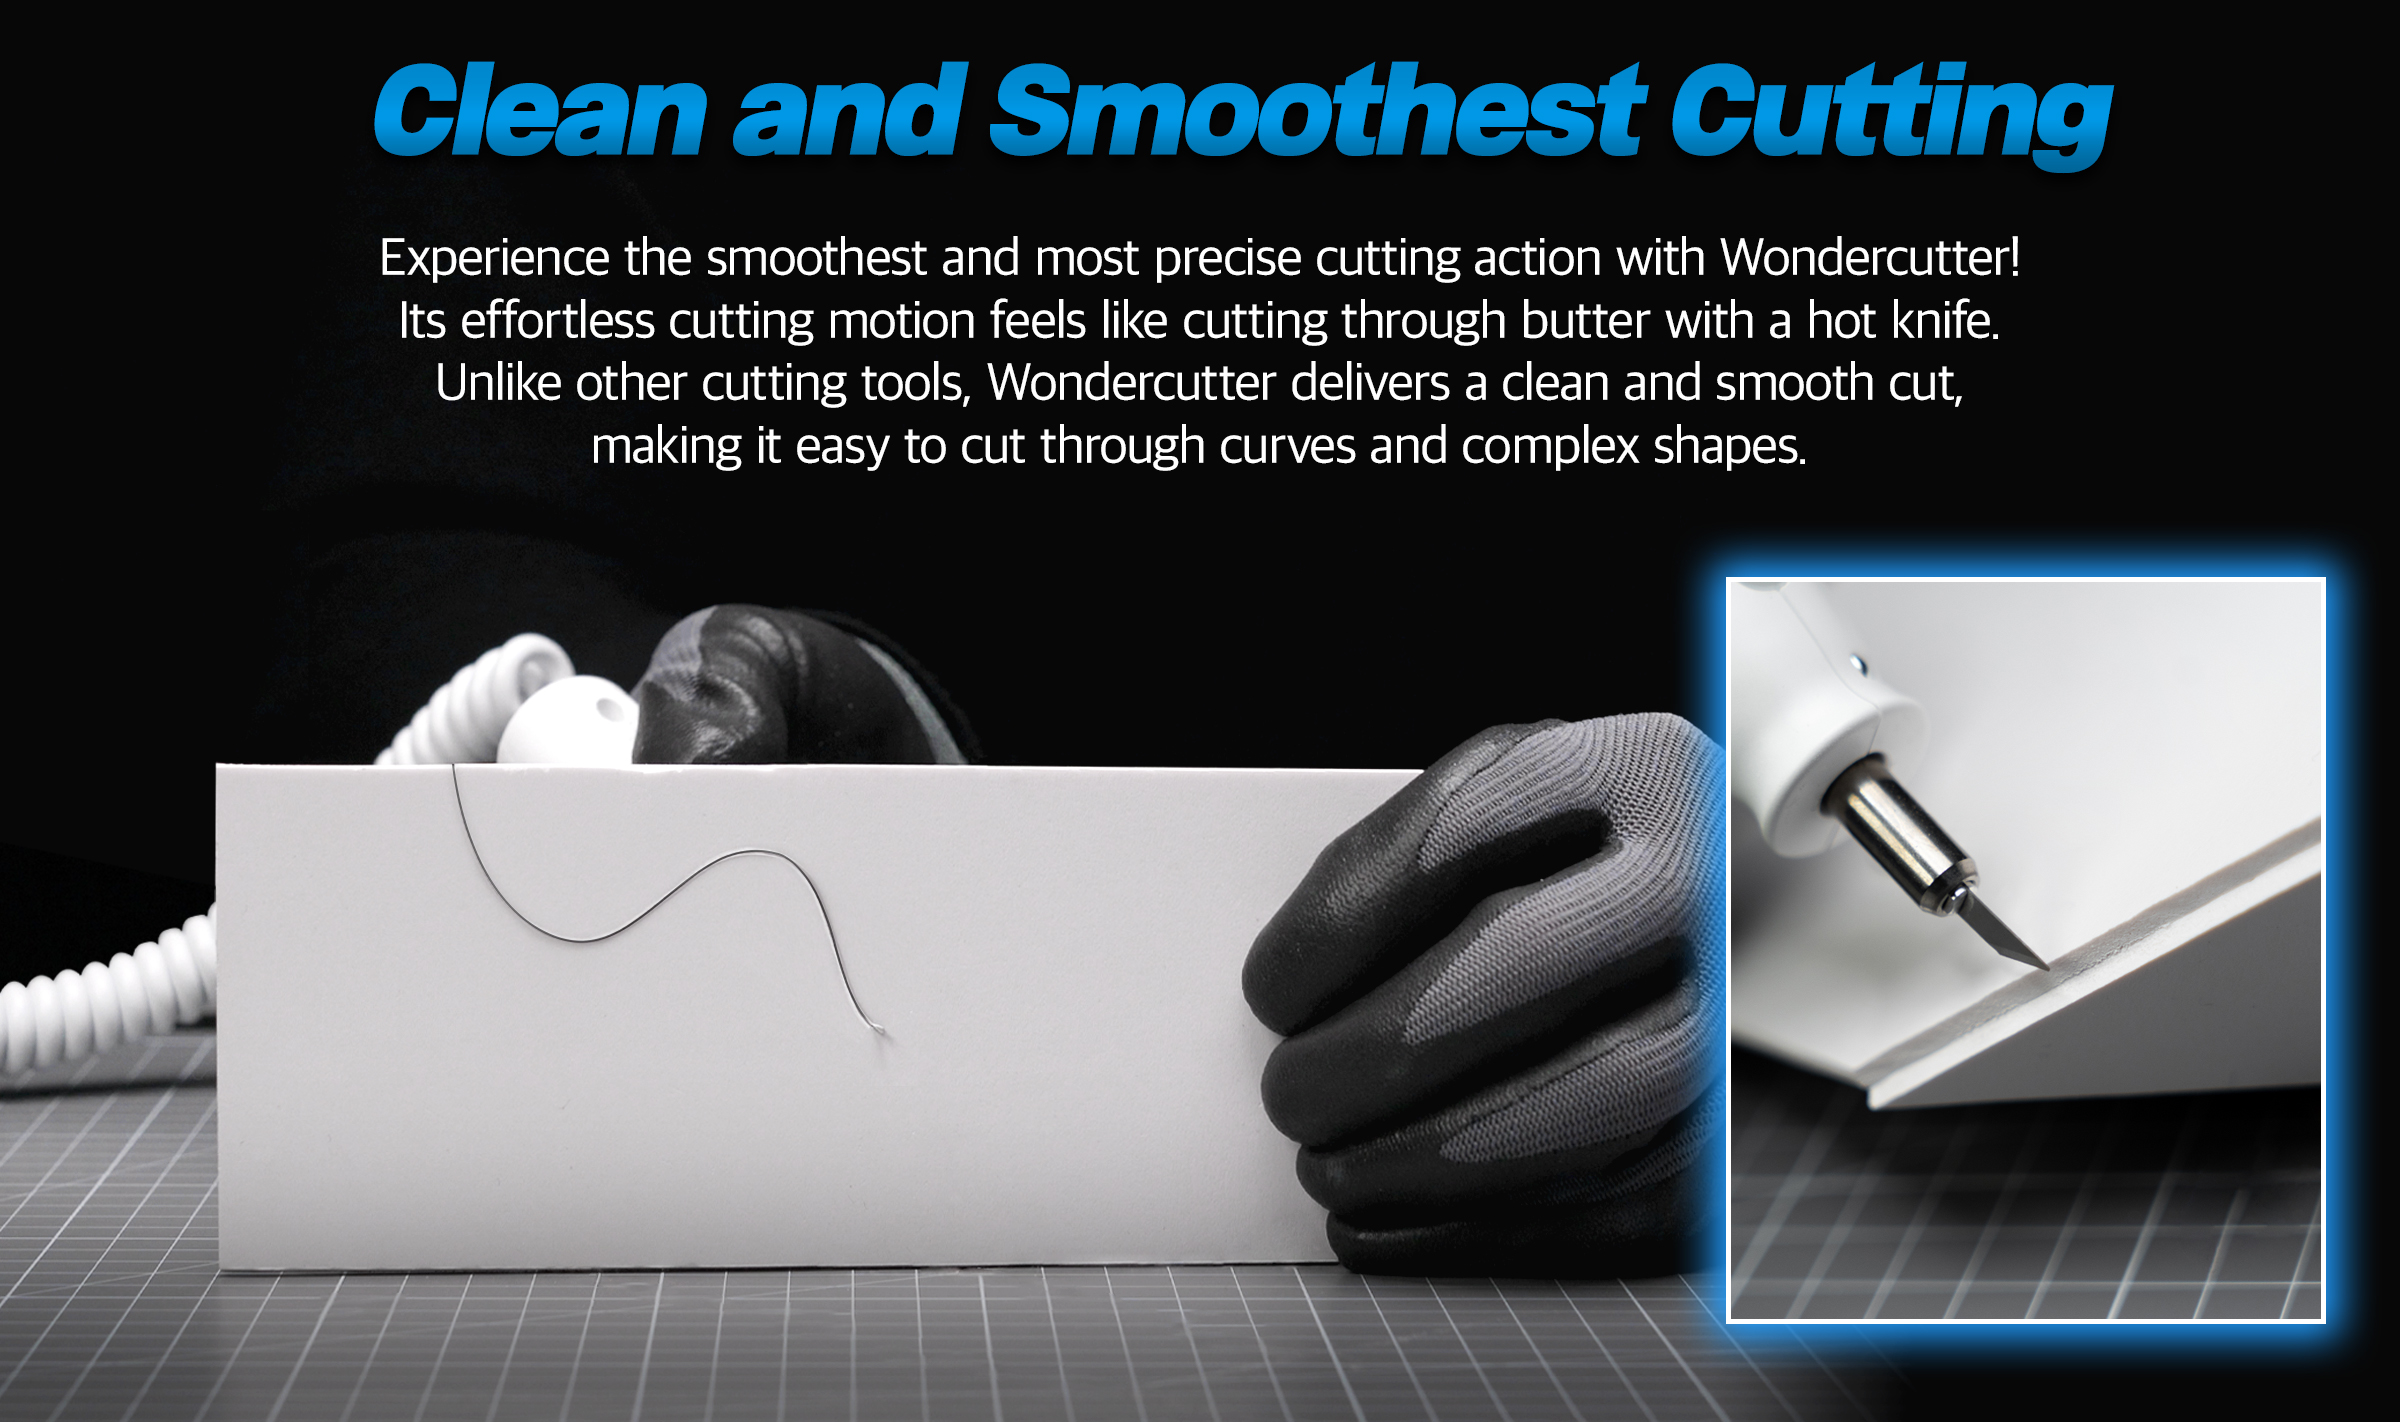 The Wondercutter S ultrasonic cutter precision cutting using 40,000  ultrasonic vibrations per second